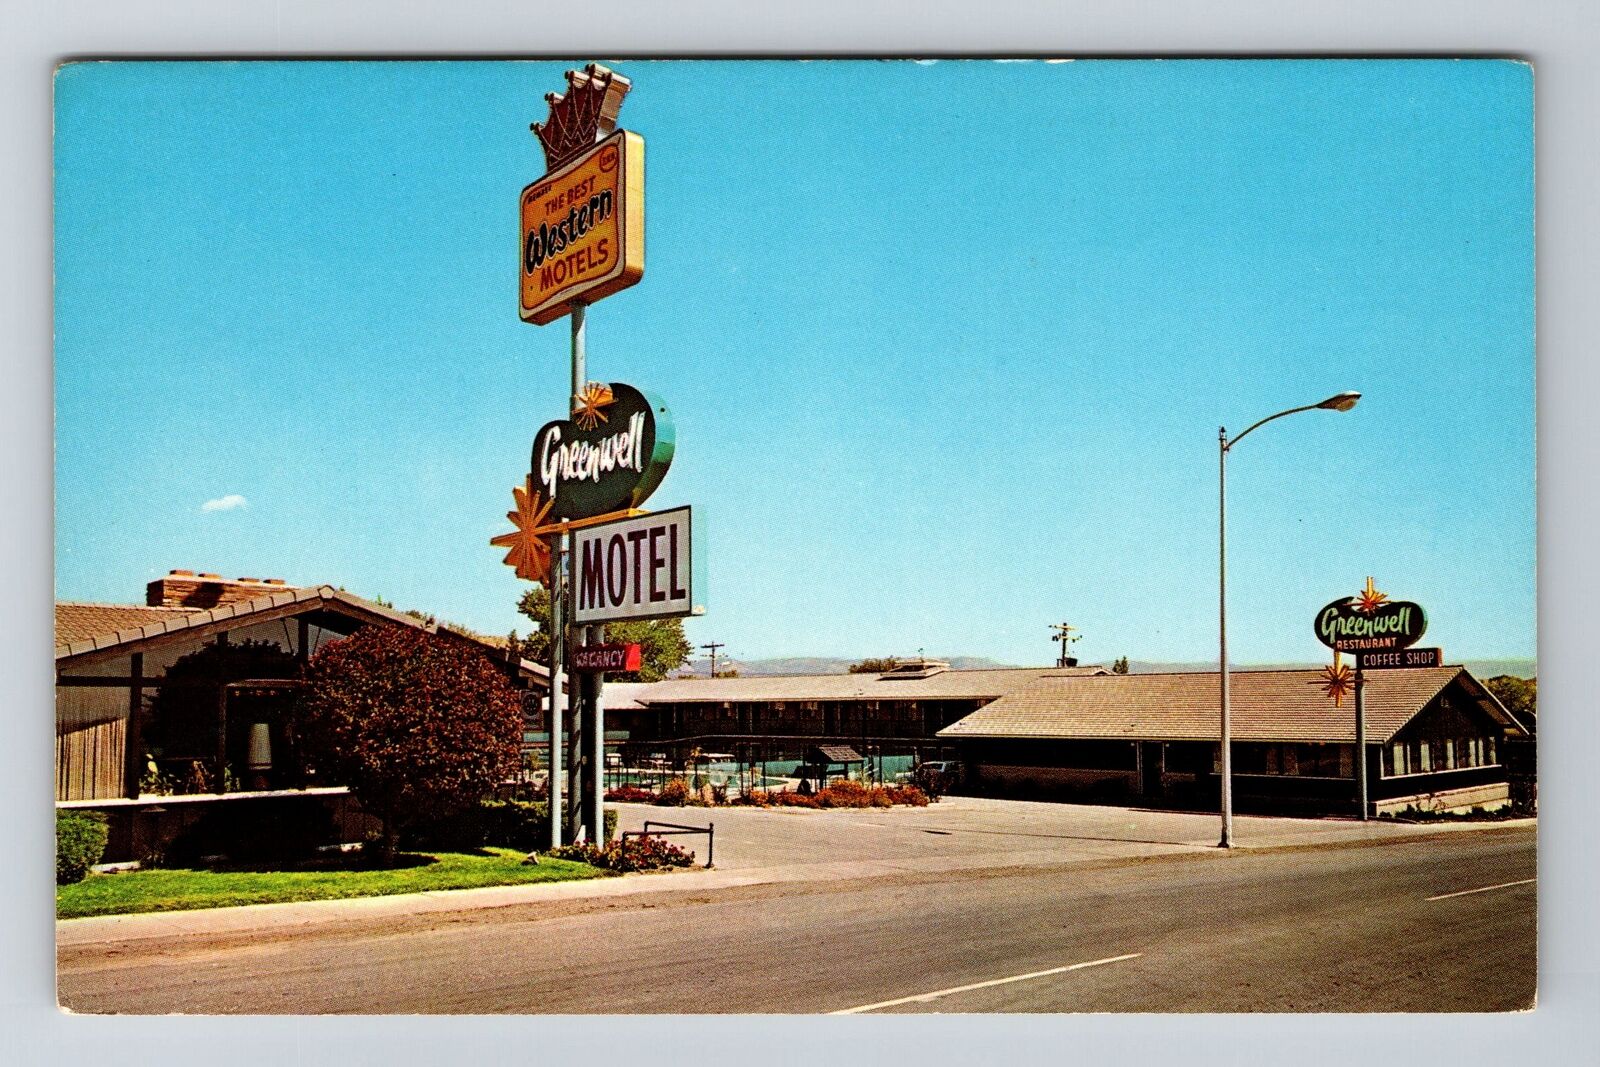 Price UT-Utah, Green Well Motel & Restaurant, Antique Vintage Souvenir Postcard